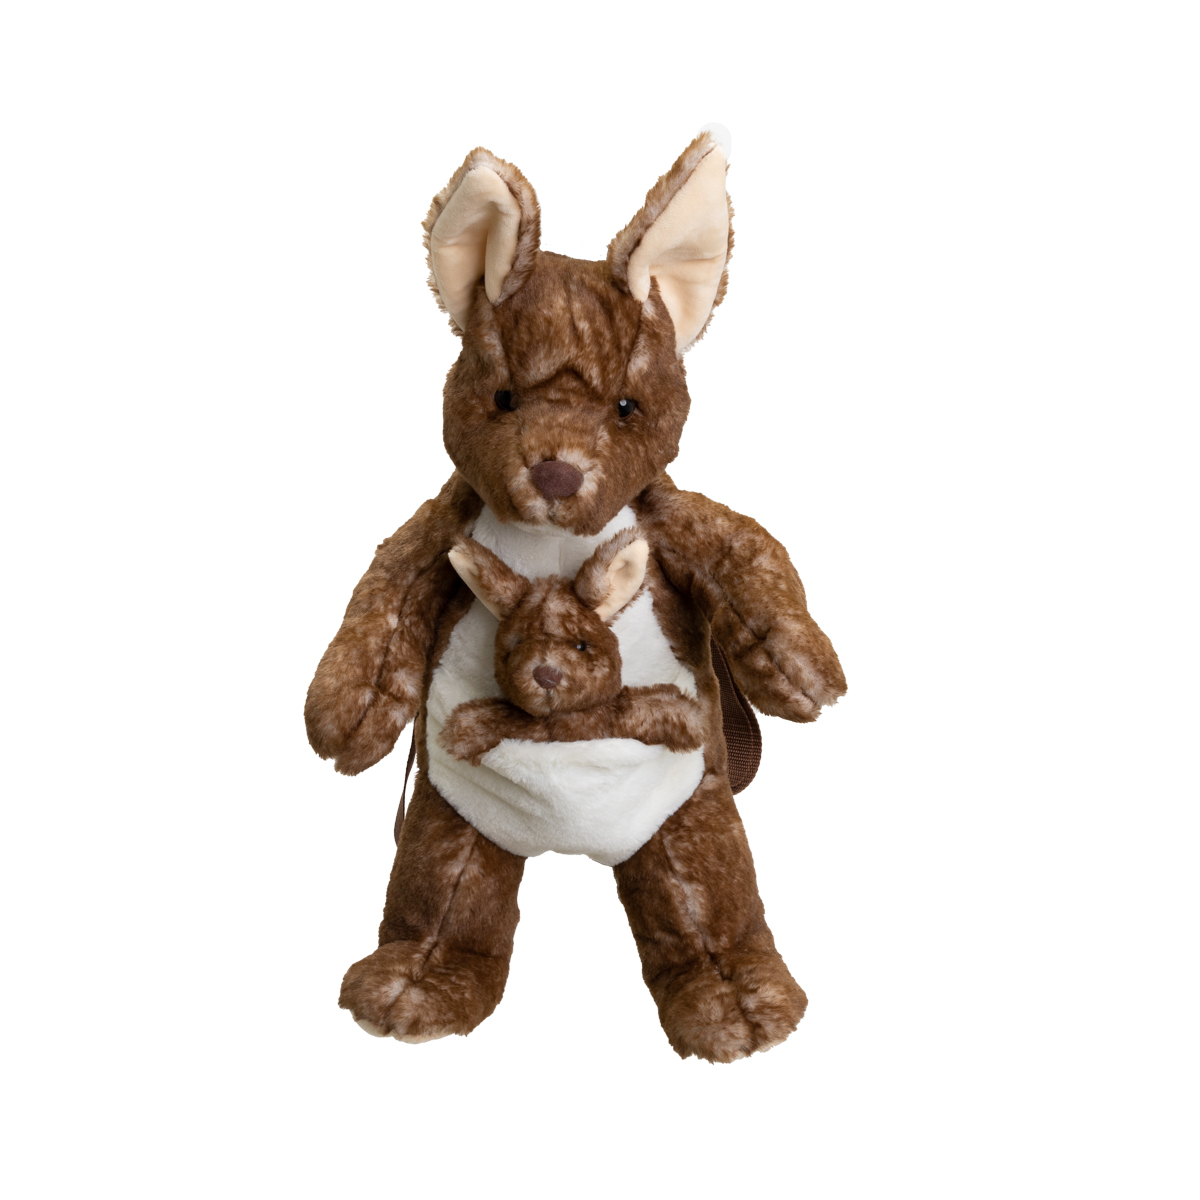 Treasure Cove Plush Kangaroo with Baby Backpack 16032I3 Kids Stuffed Kangaro 20-Inch Day Pack with Hidden Pocket Brown